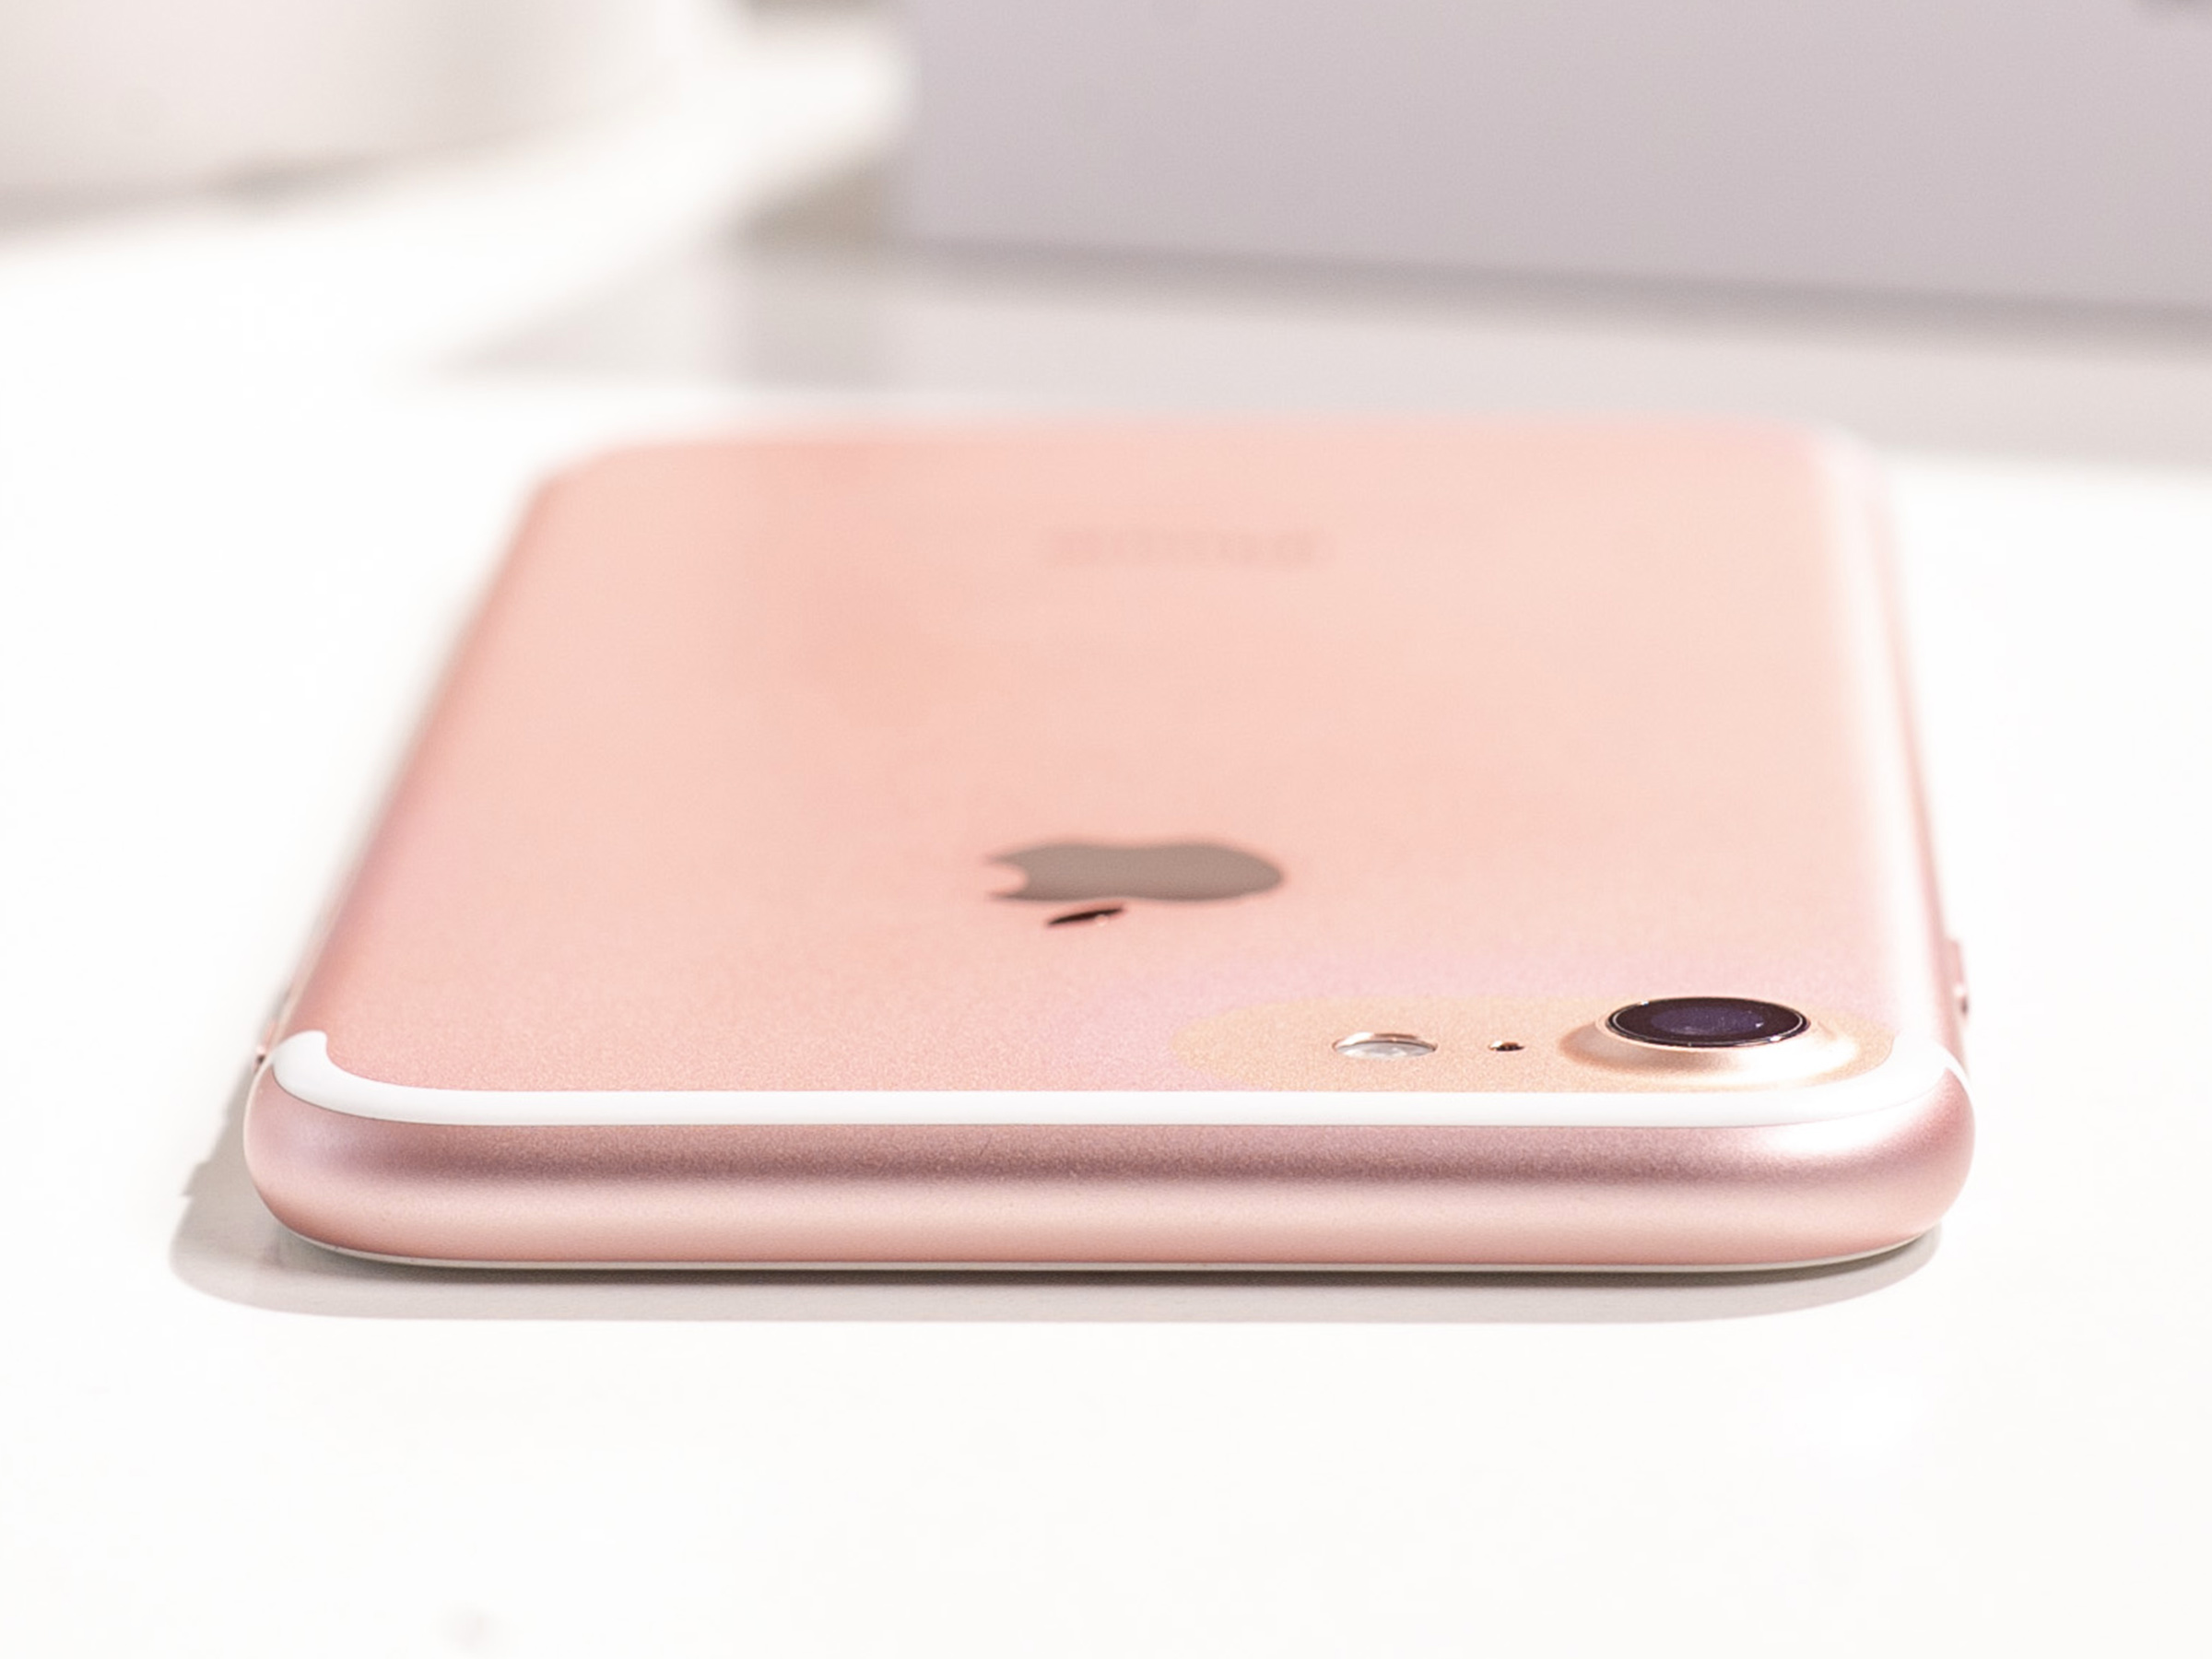 iPhone 7 128GB Rose Gold (MN952) б/у